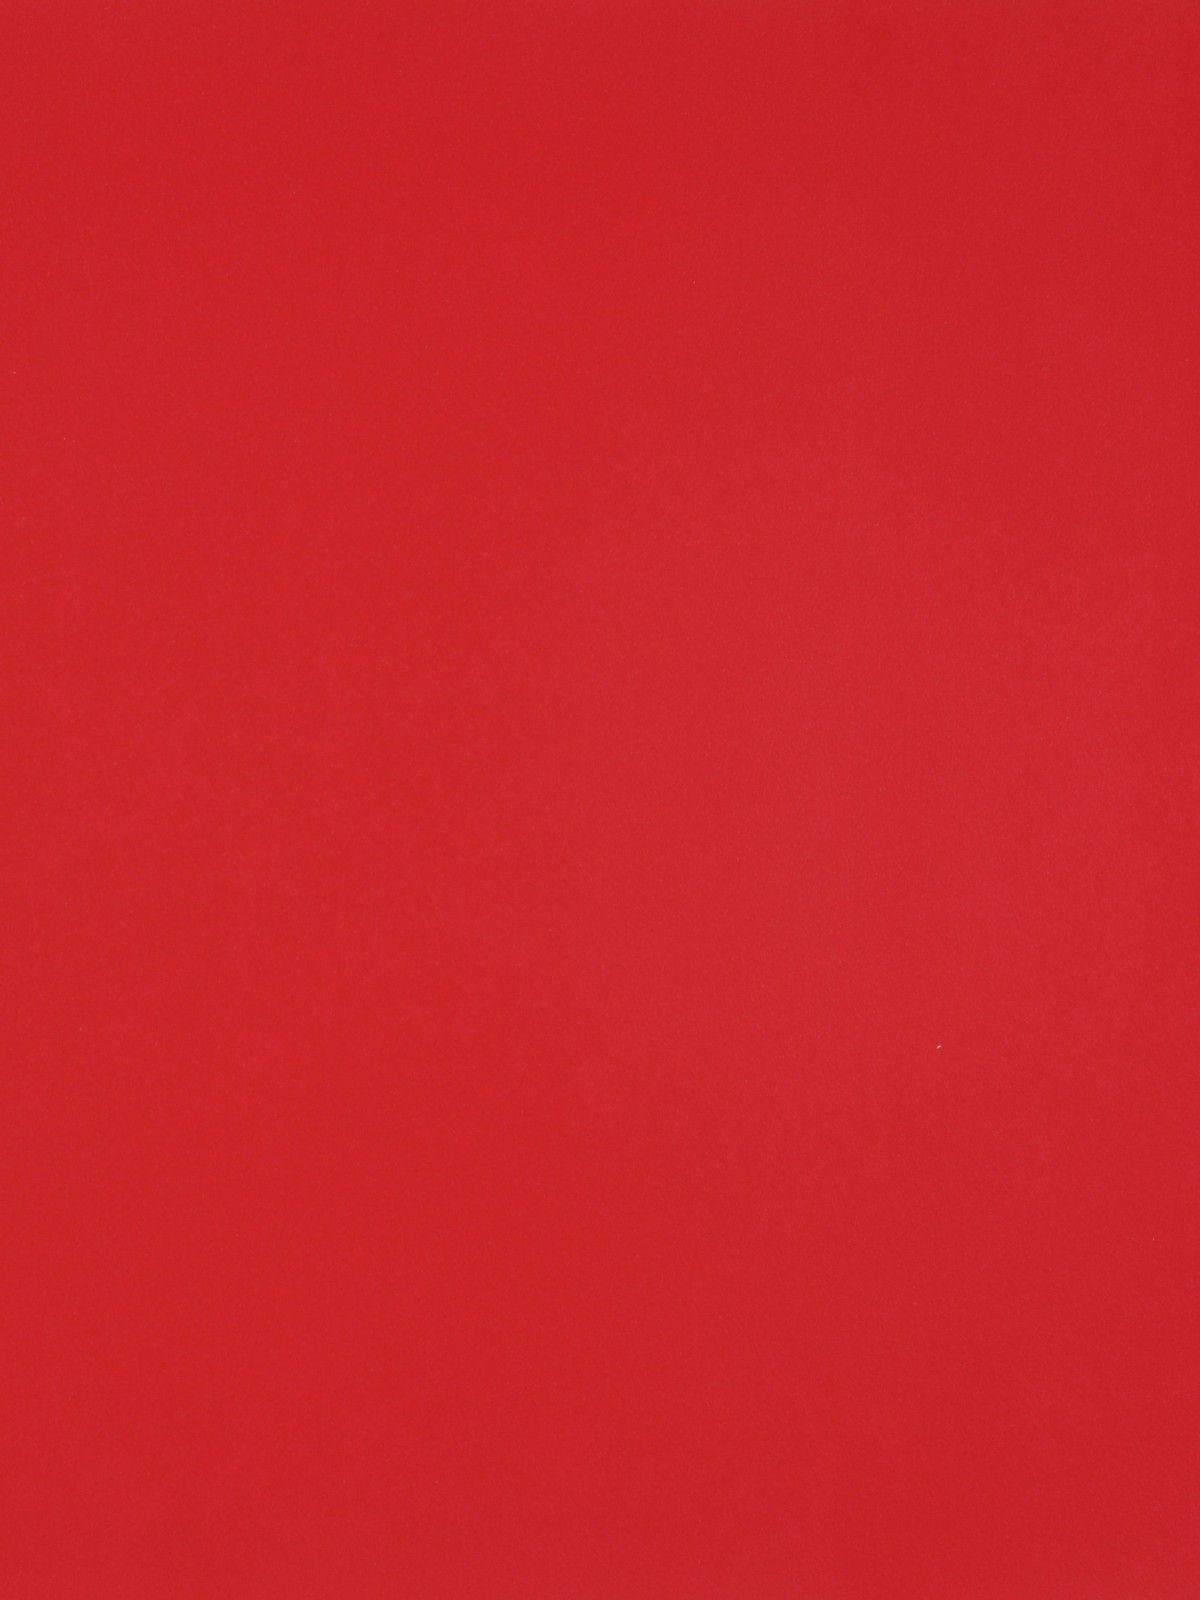 red wallpapers phone desktop hd 4k 5